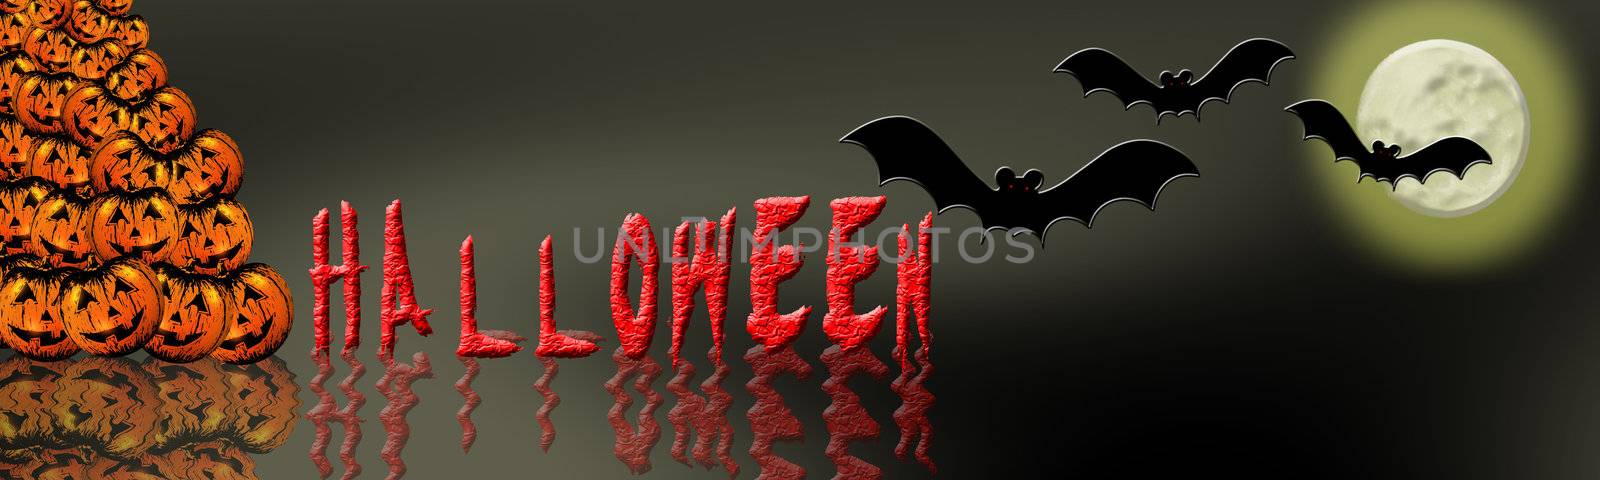 halloween banner 07 by walex101